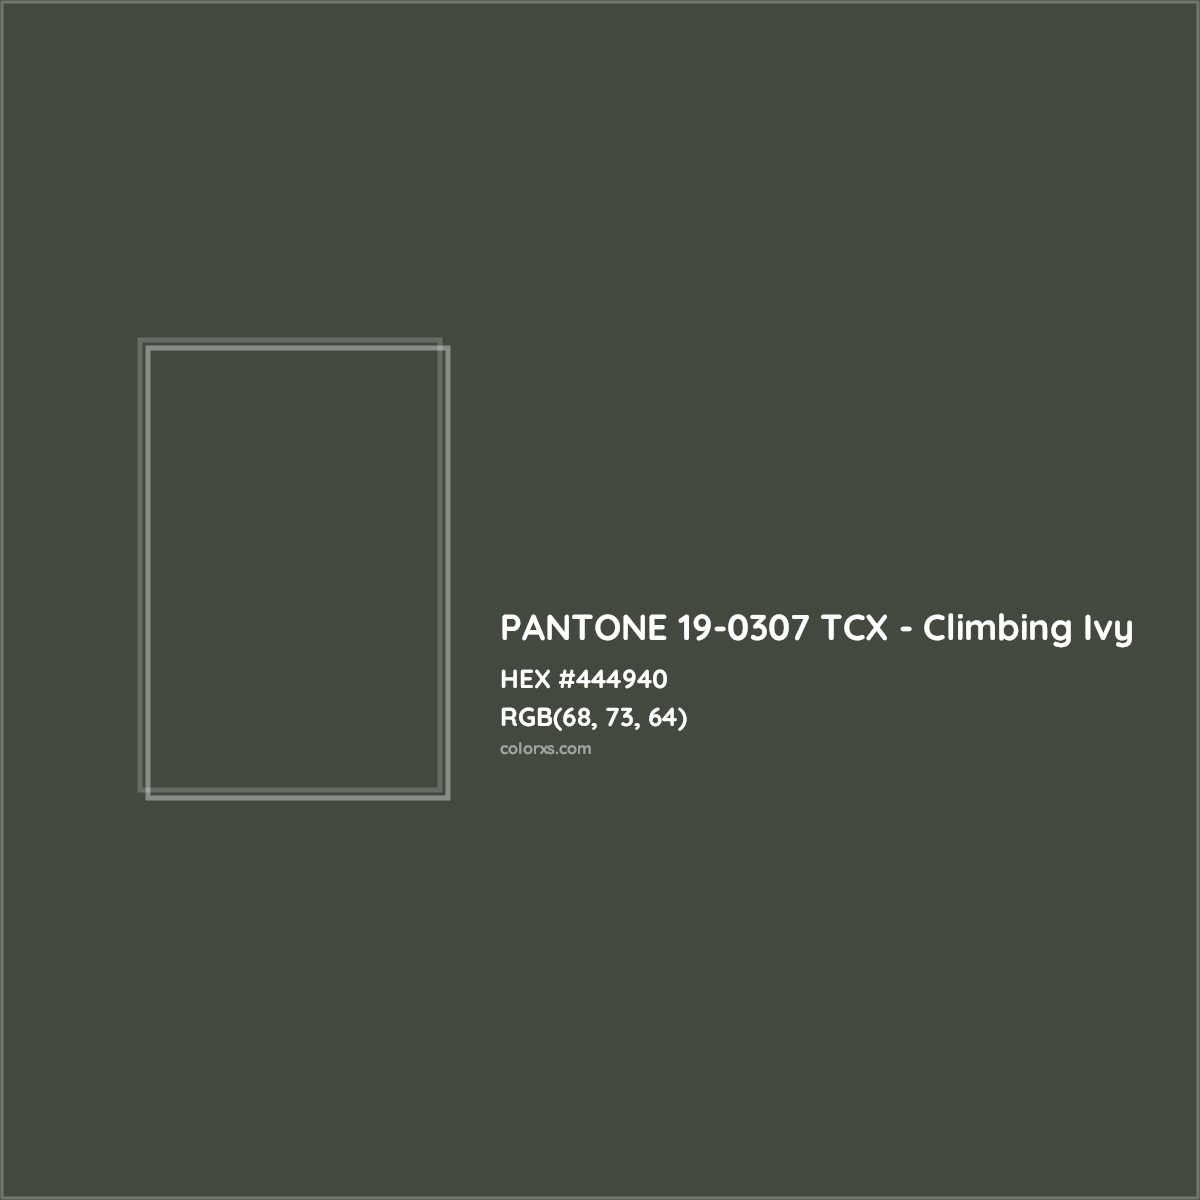 HEX #444940 PANTONE 19-0307 TCX - Climbing Ivy CMS Pantone TCX - Color Code